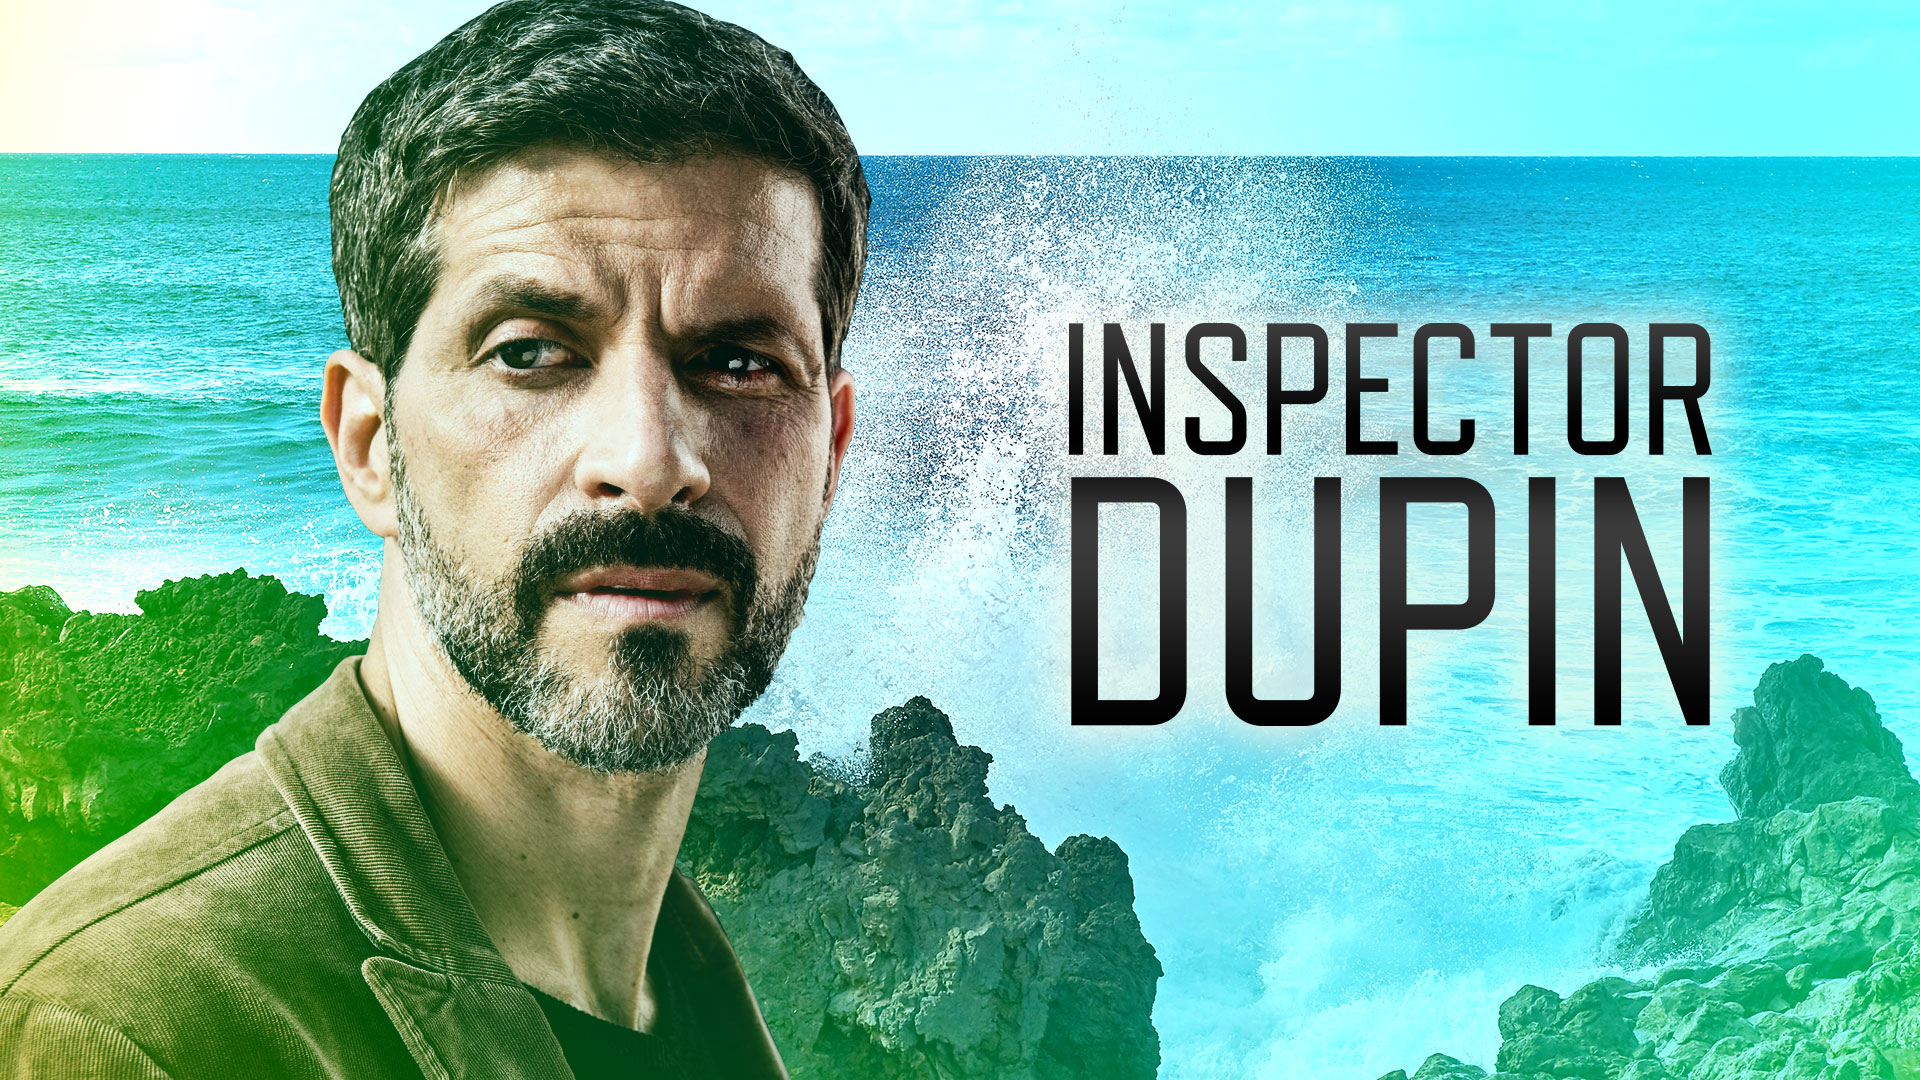 inspector dupin season 2